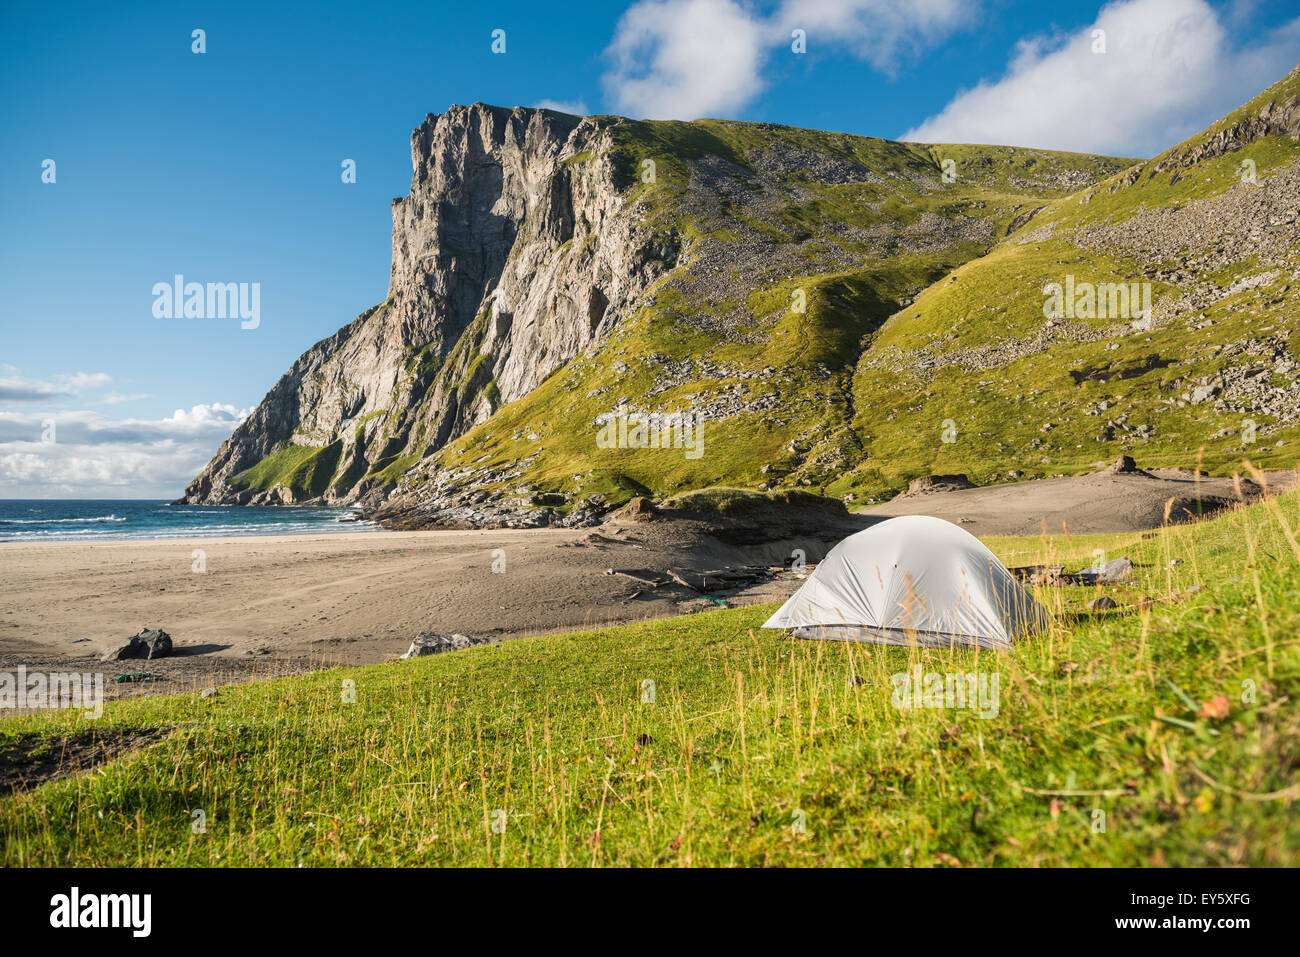 Zelt camping am Kvalvika Strand, Moskenesøy, Lofoten Inseln, Norwegen  Stockfotografie - Alamy